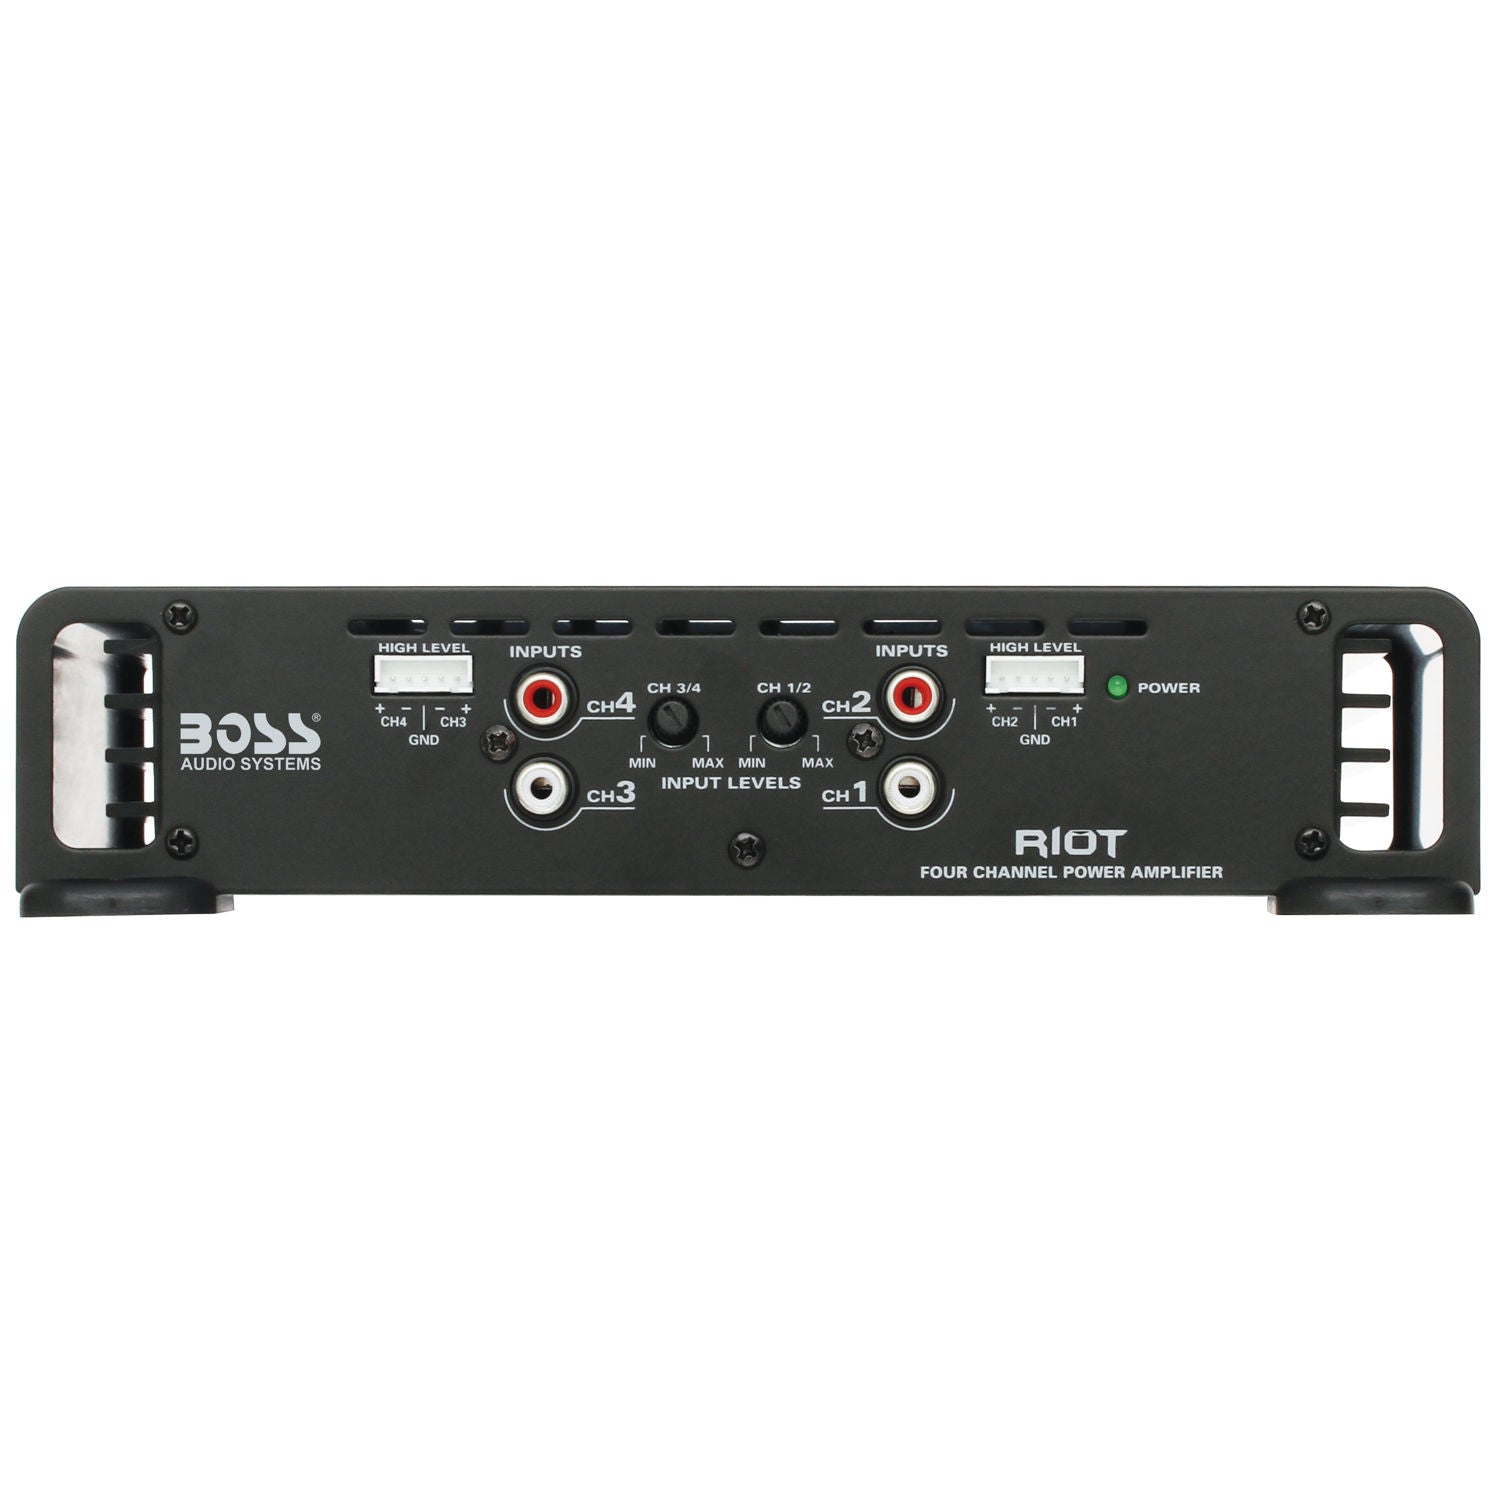 Boss R1004 - Riot Amplifier 4 channel Class A/B 400W 7.75"L x 9"W x 2"H